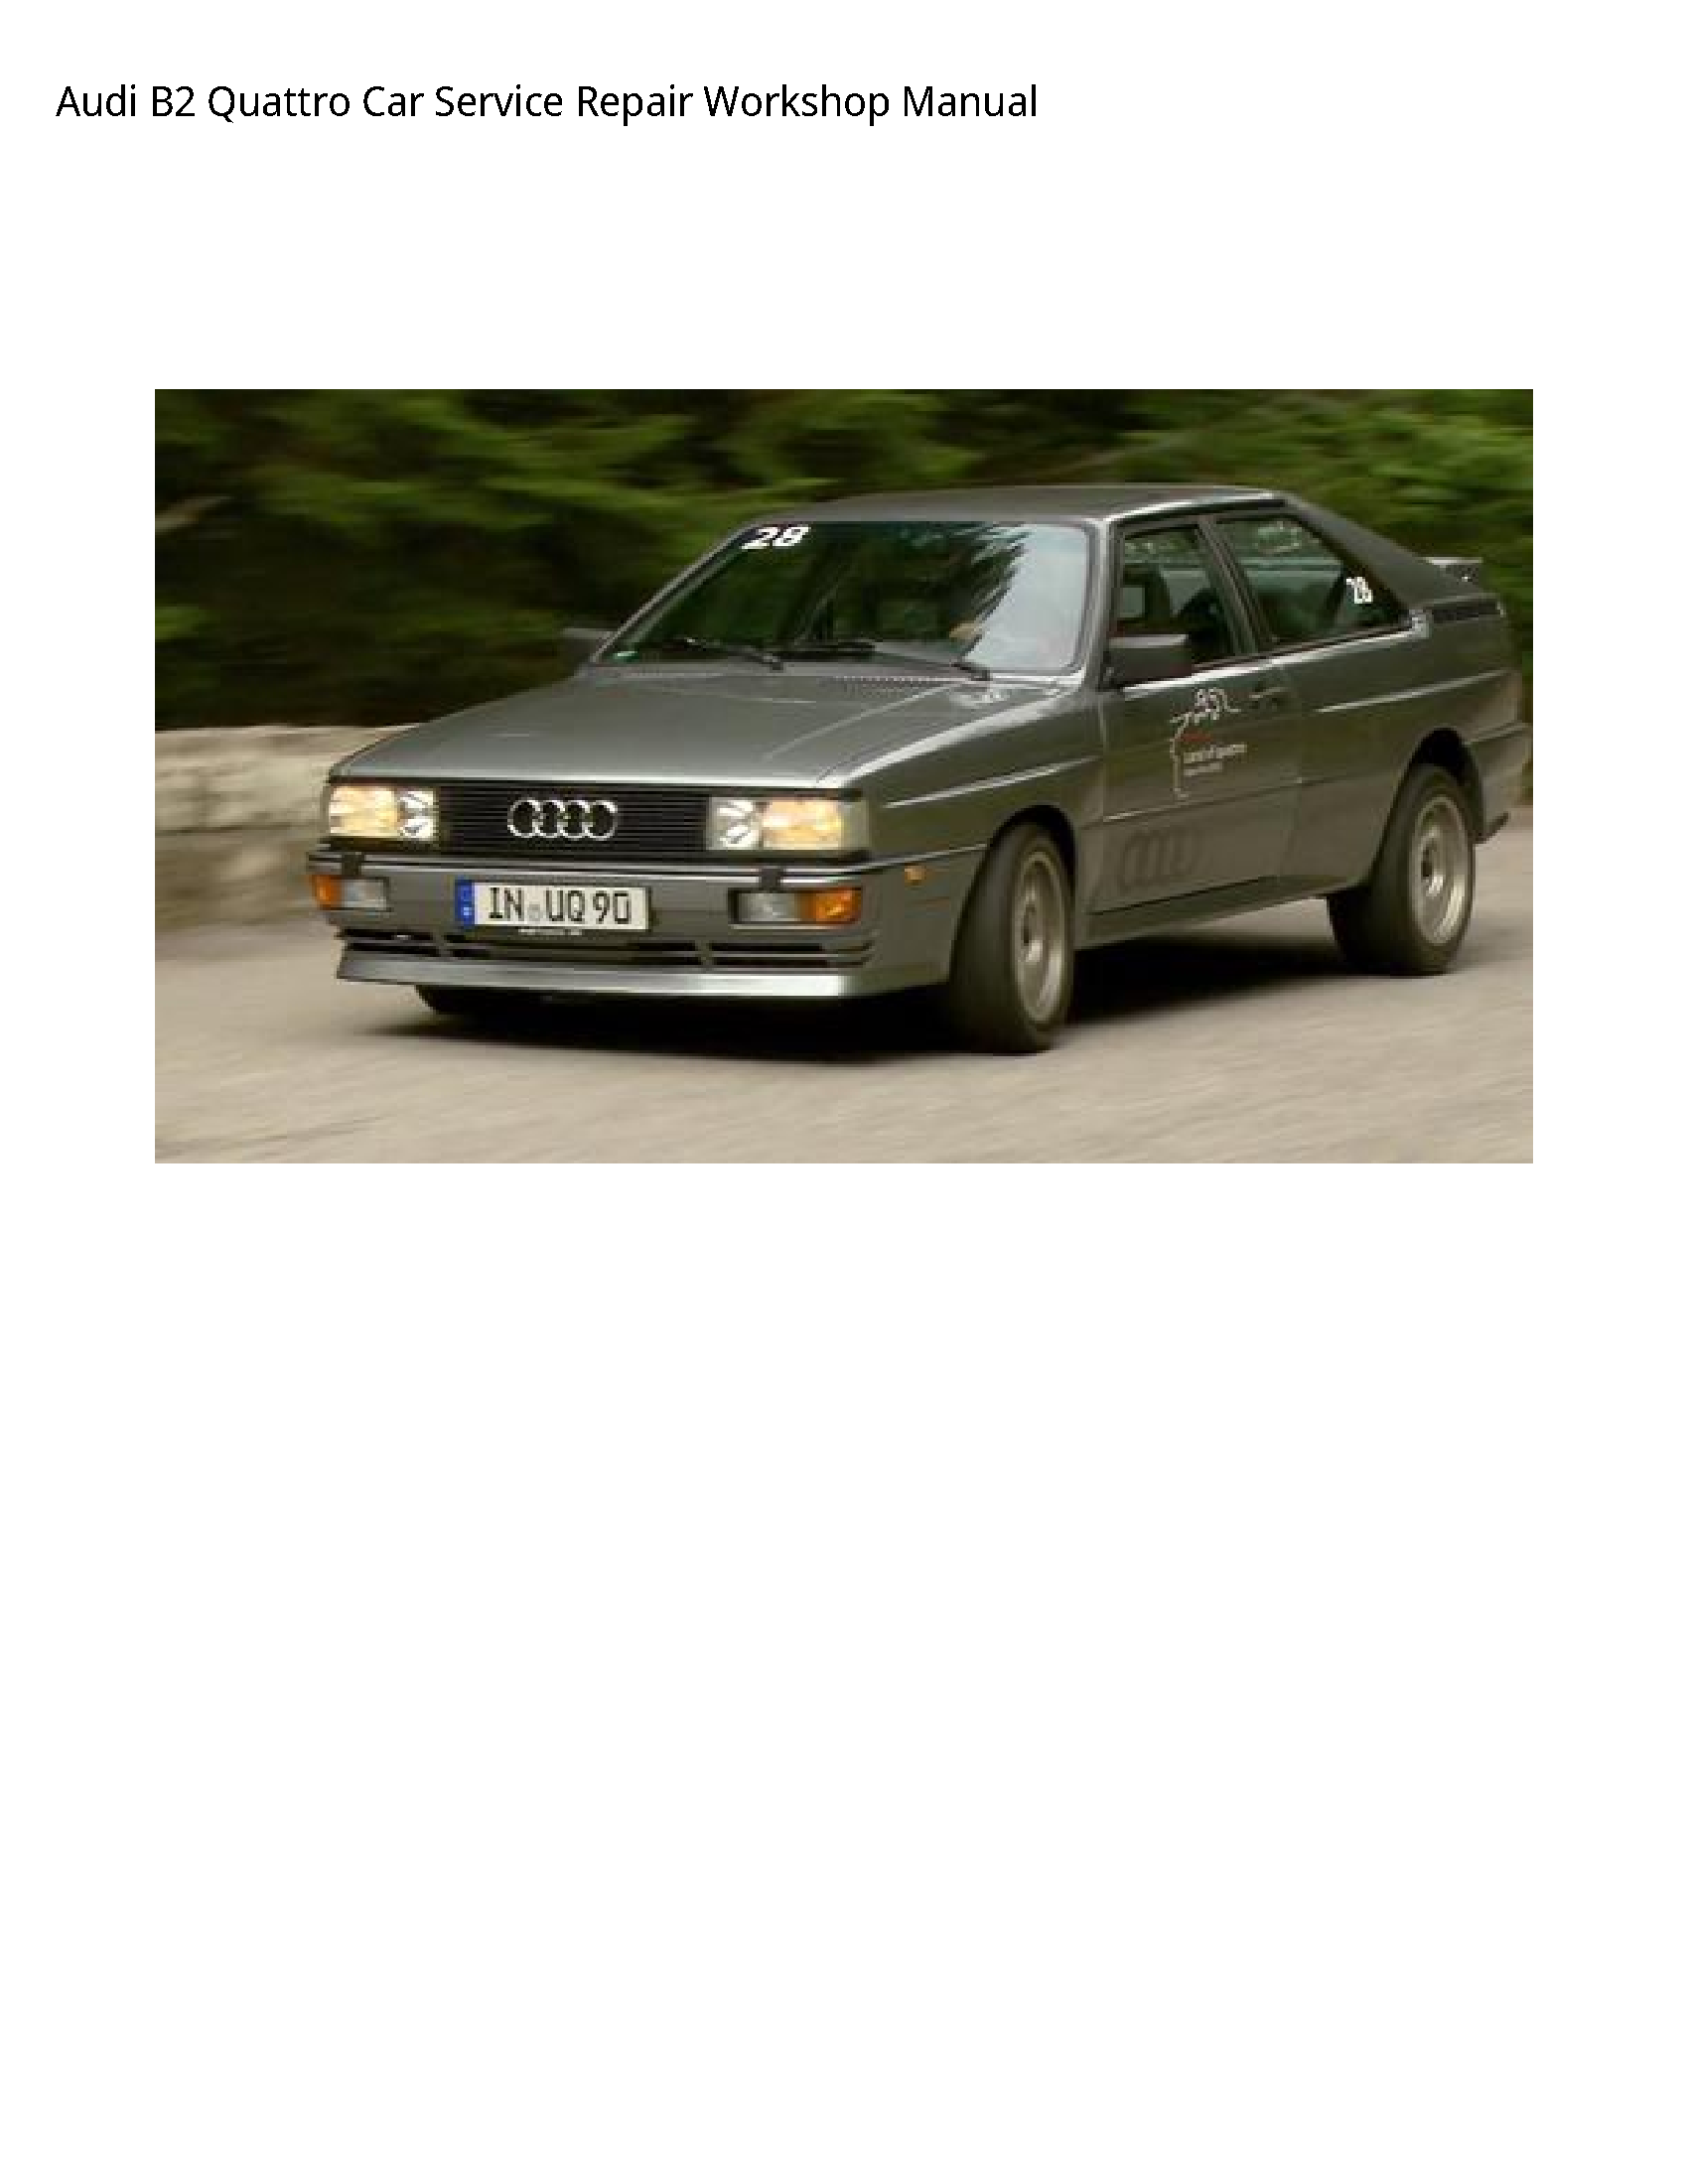 Audi B2 Quattro Car manual